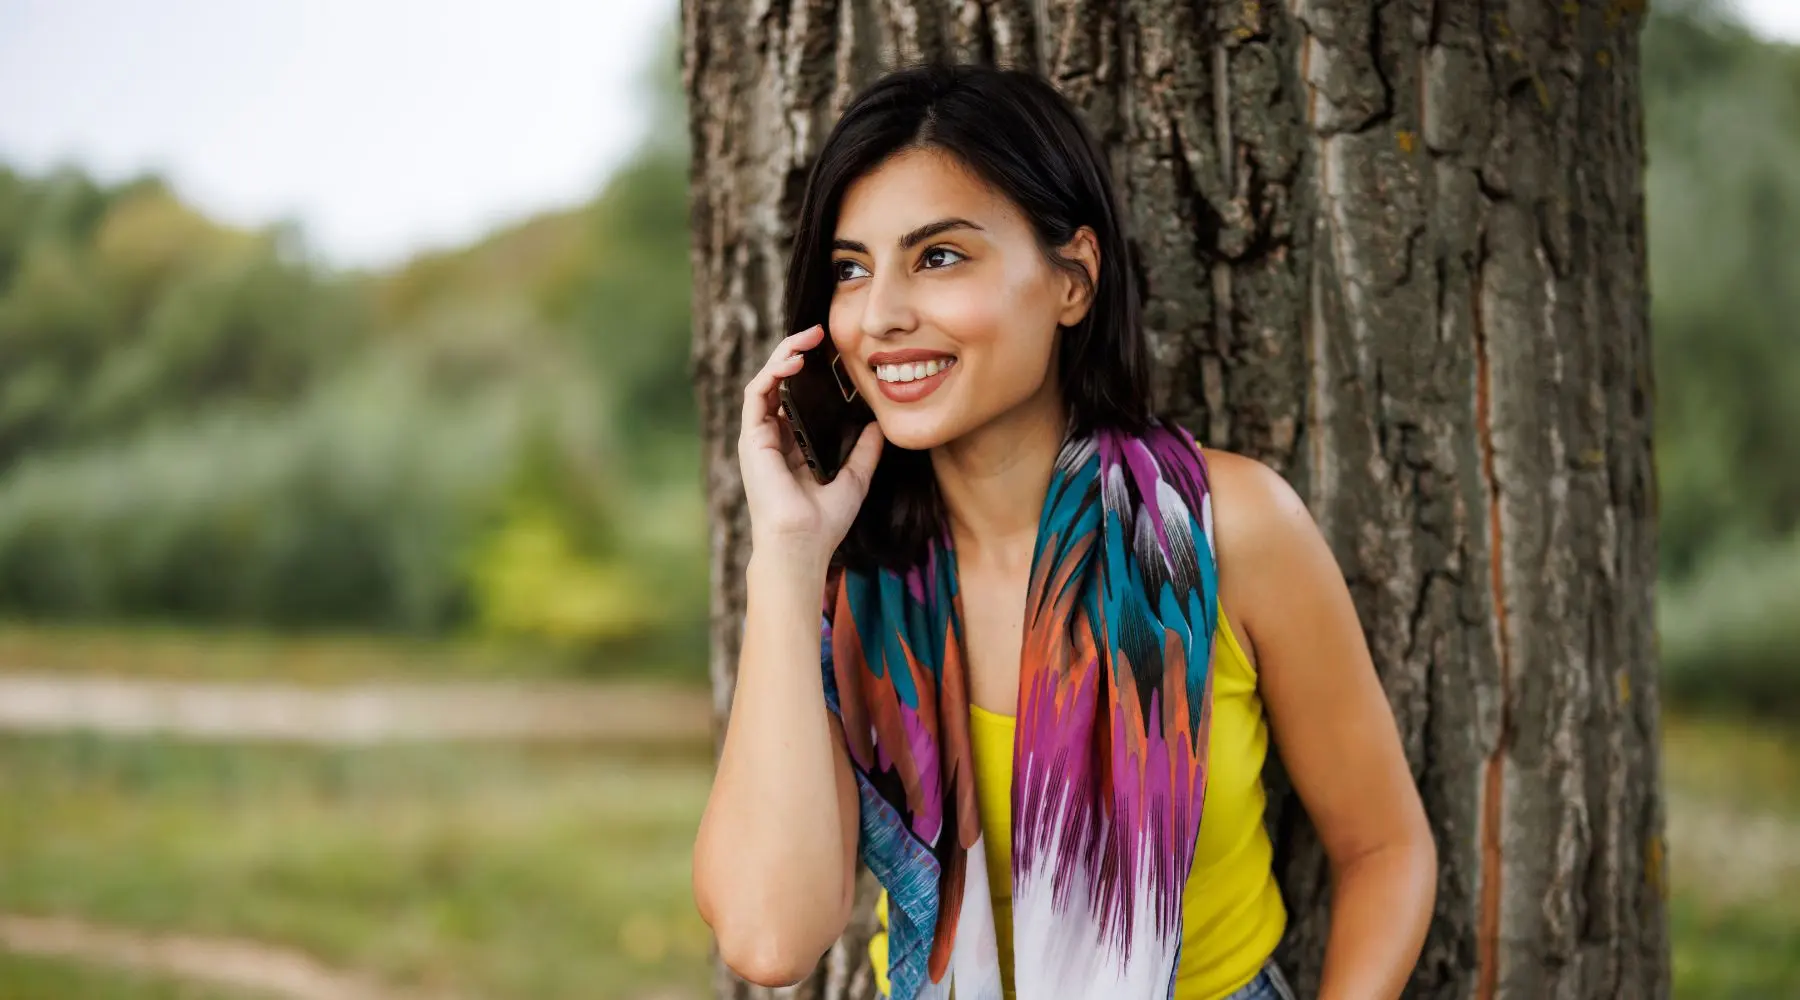 Woman on phone near a tree